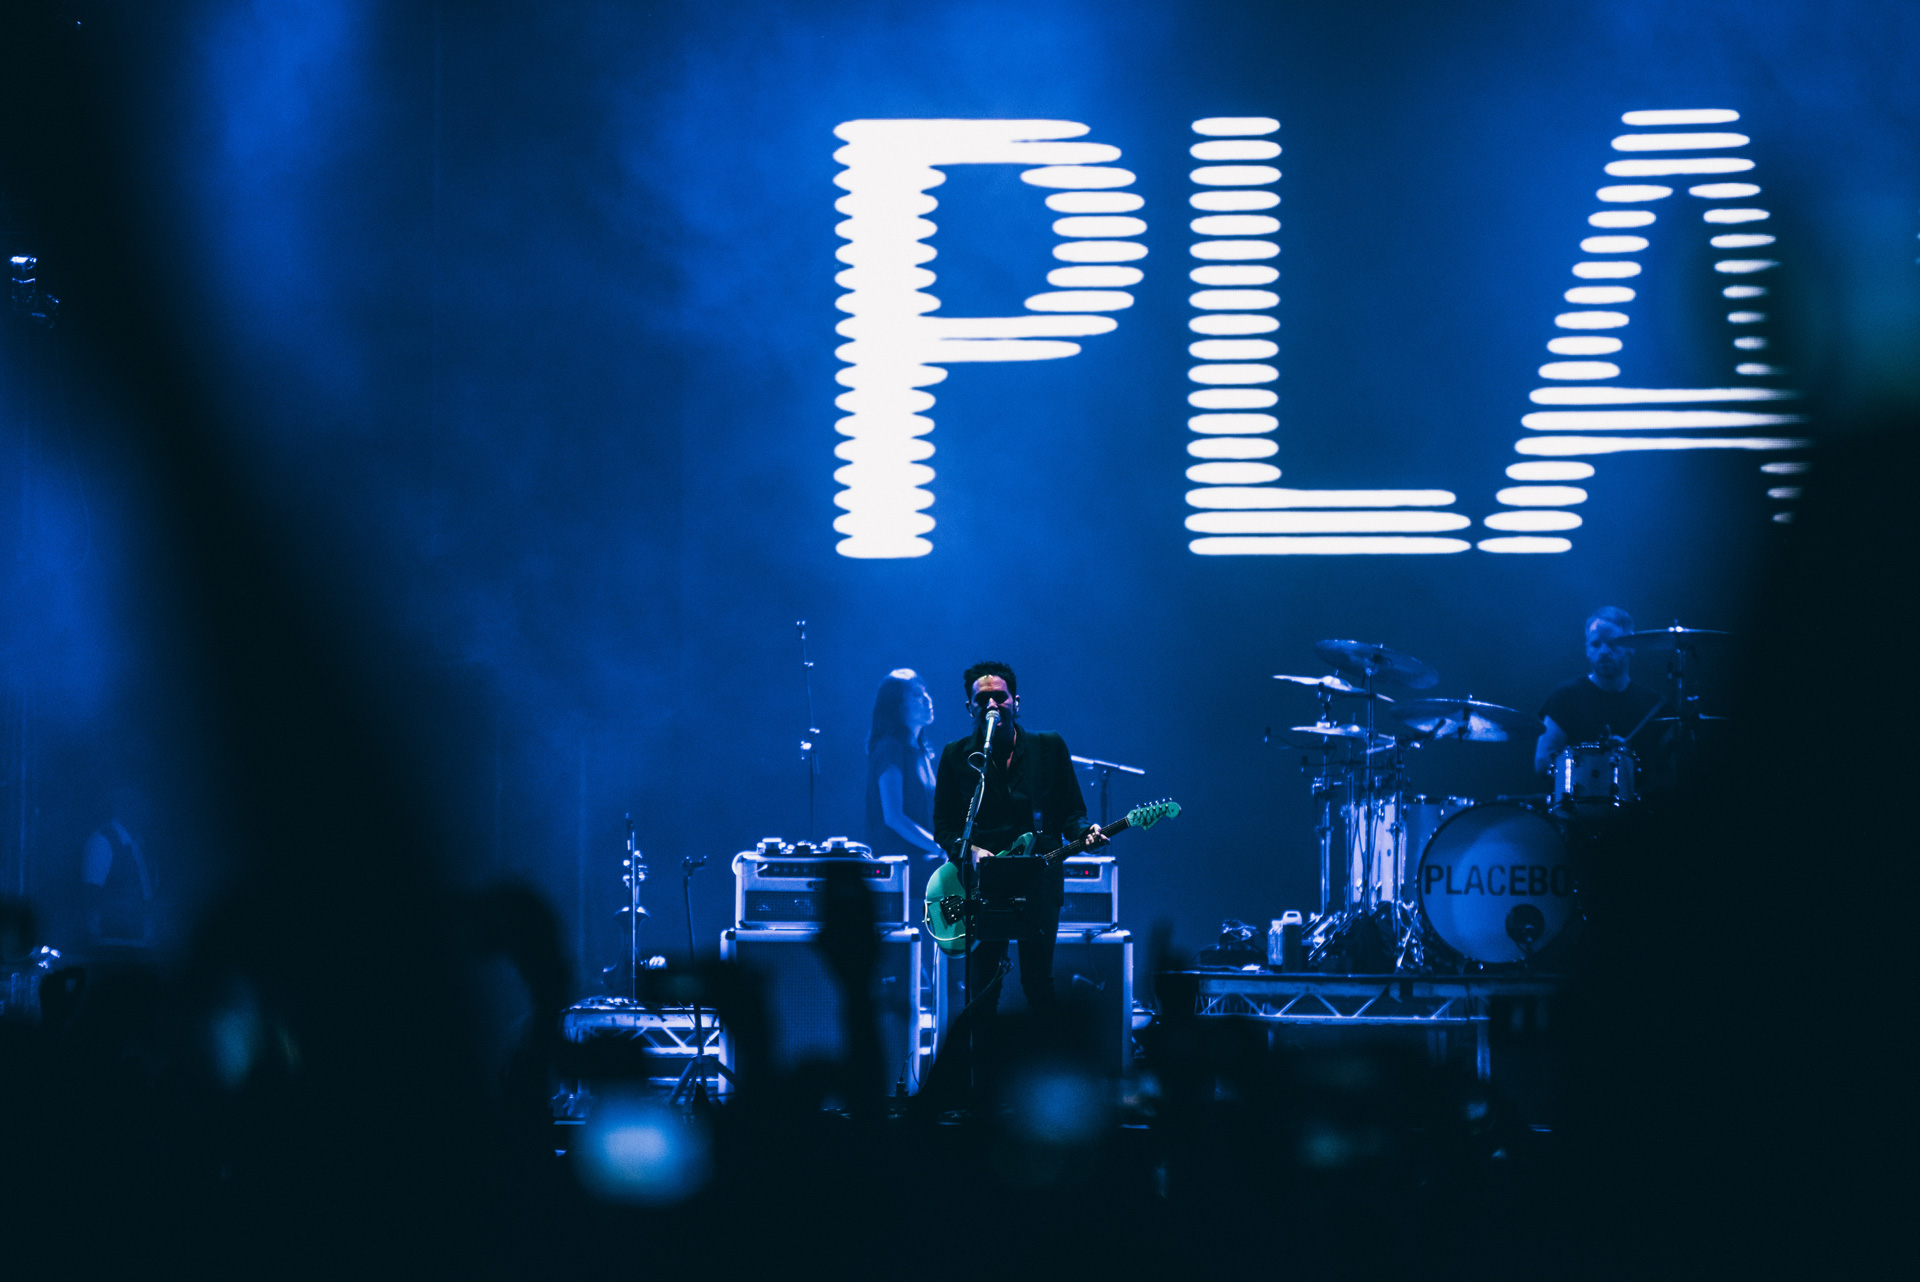 Placebo на ATLAS Weekend 2018